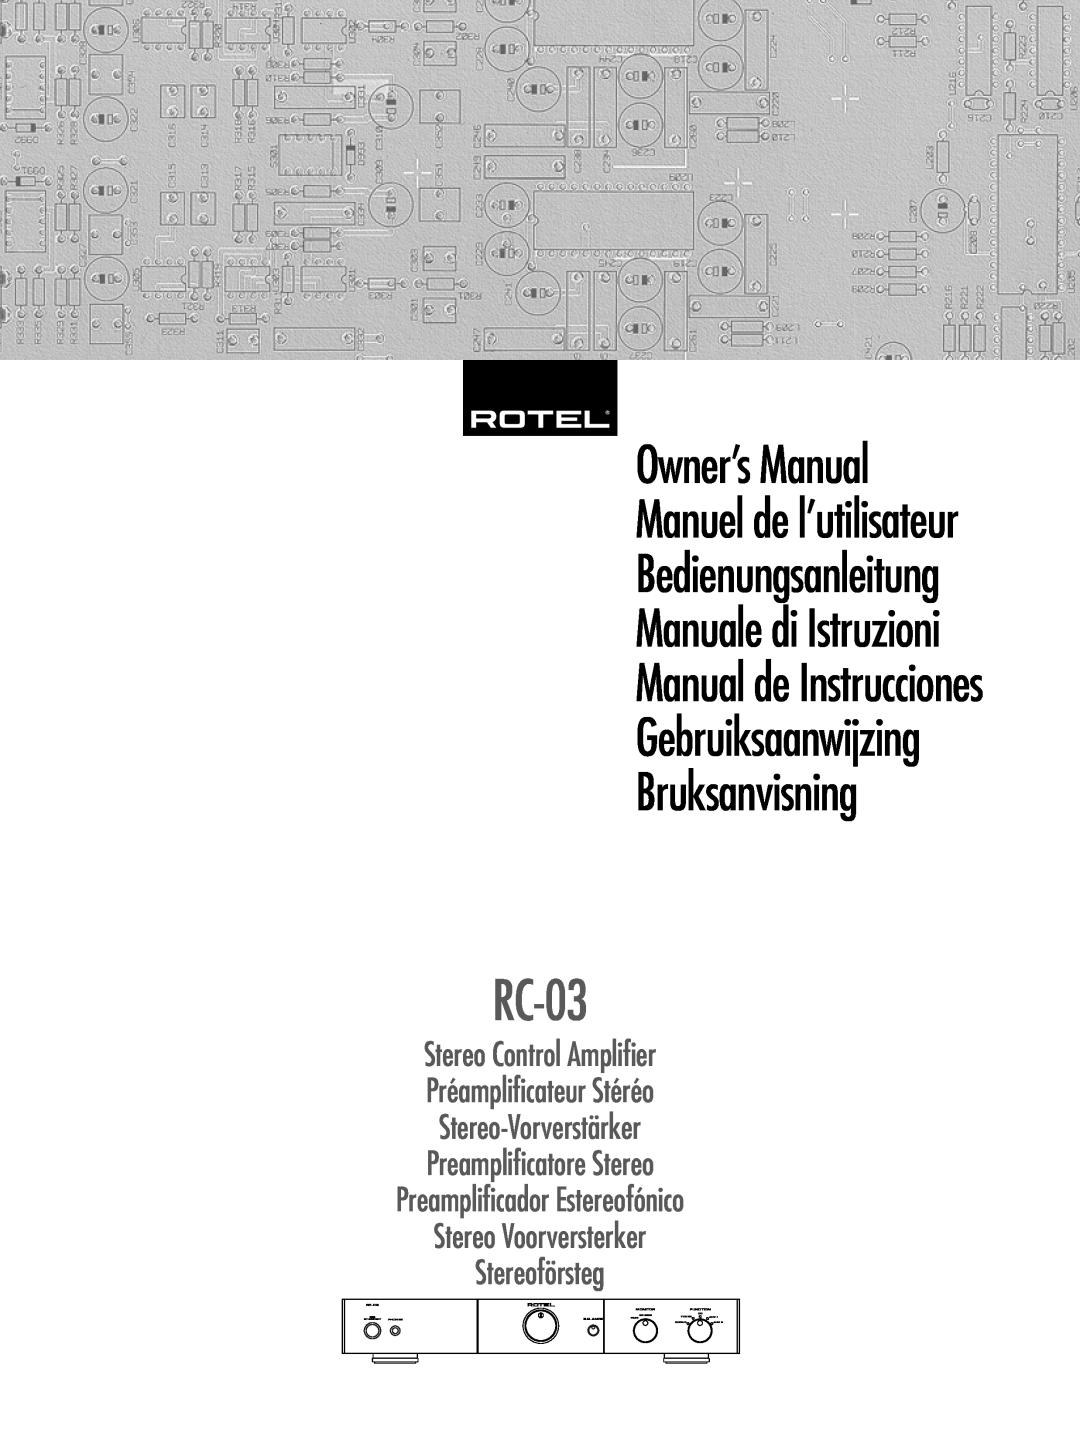 Rotel RC-03 owner manual OwnerÕs Manual, Manual de Instrucciones Gebruiksaanwijzing, Bruksanvisning, Manuale di Istruzioni 